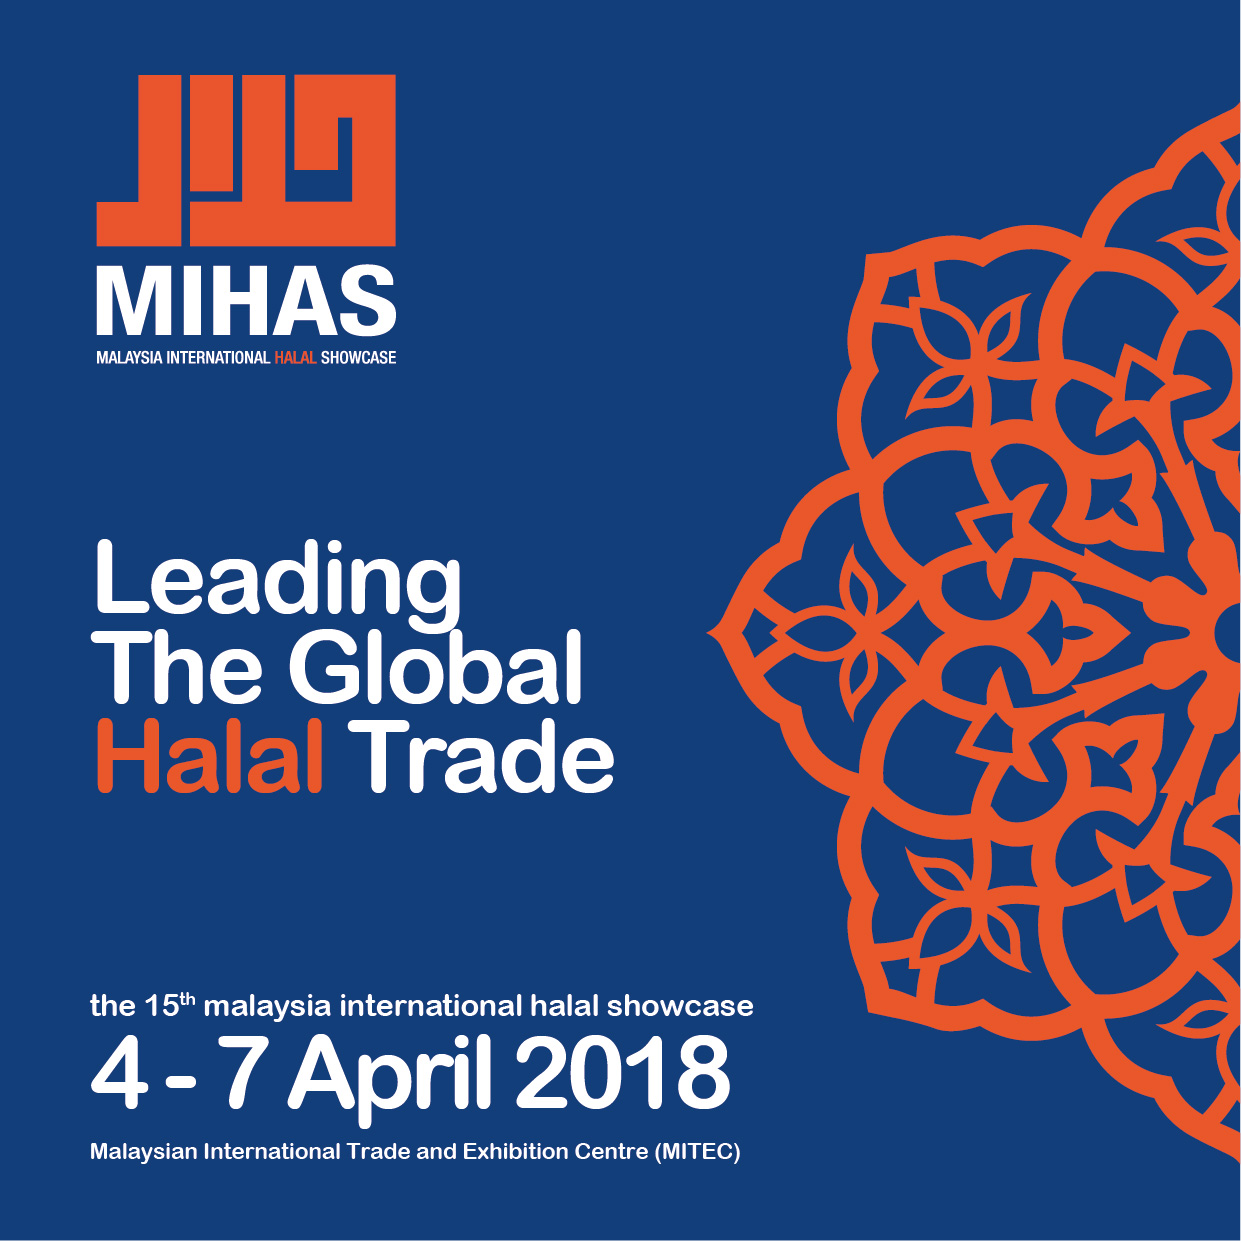 The Malaysia International Halal Showcase (MIHAS) 2018